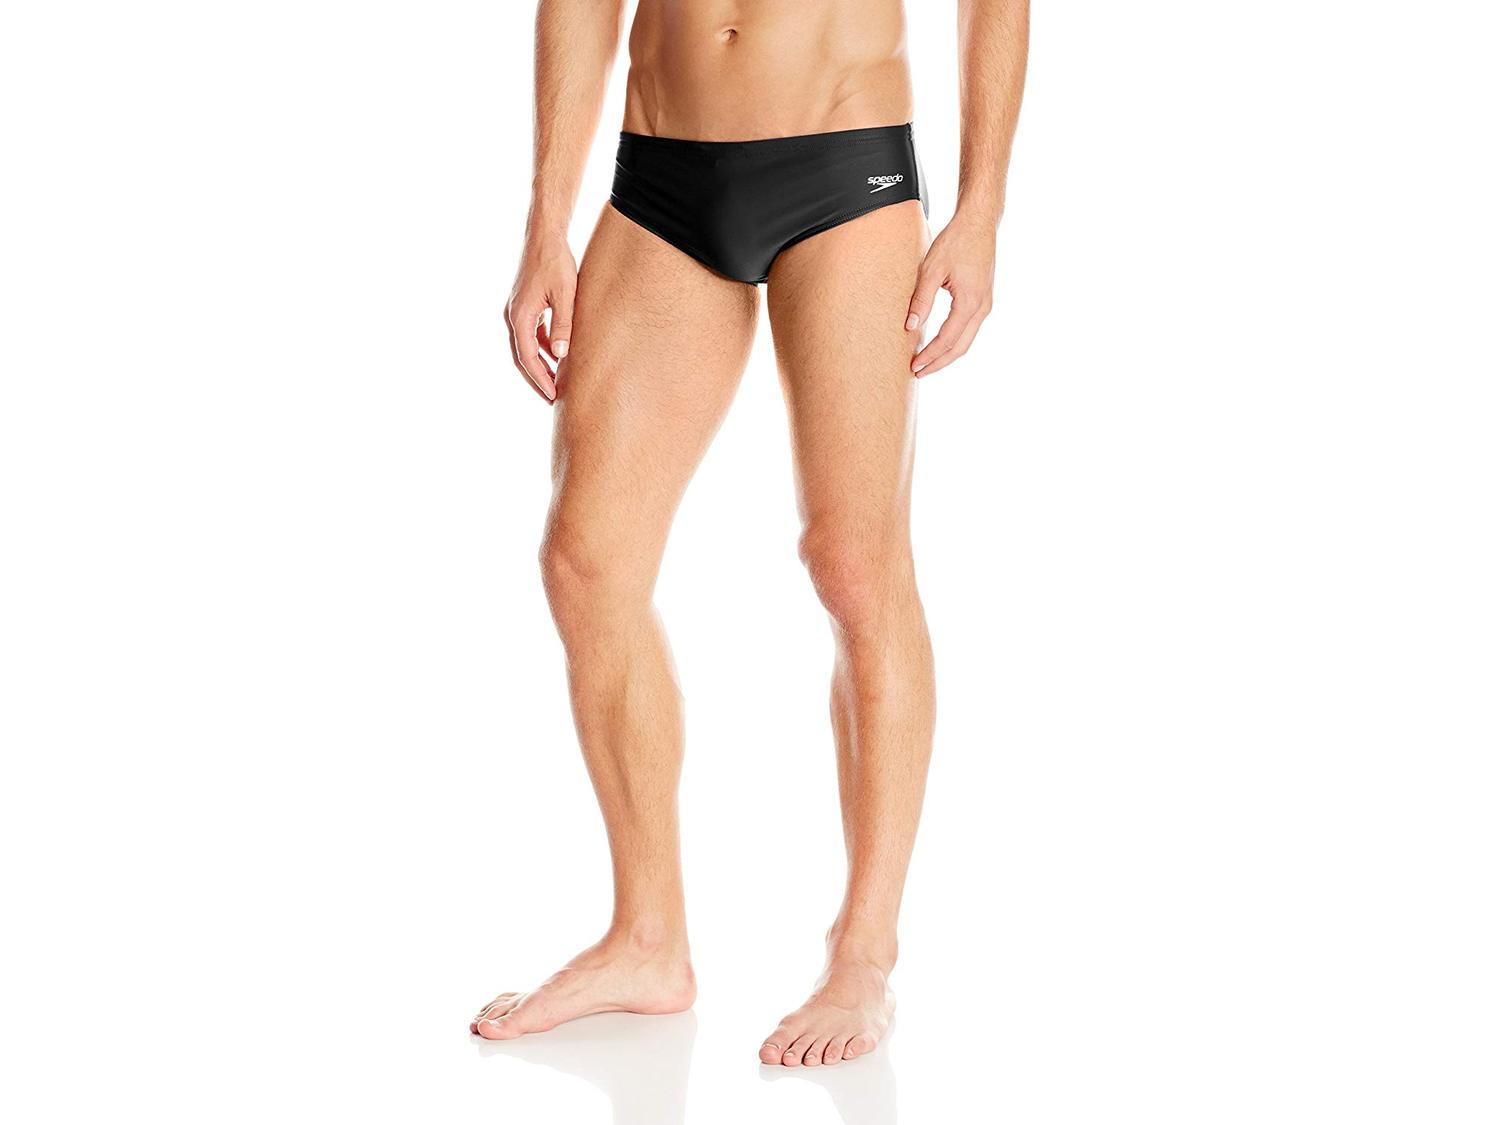 Speedo Male Brief Swimsuit - Bargainwizz